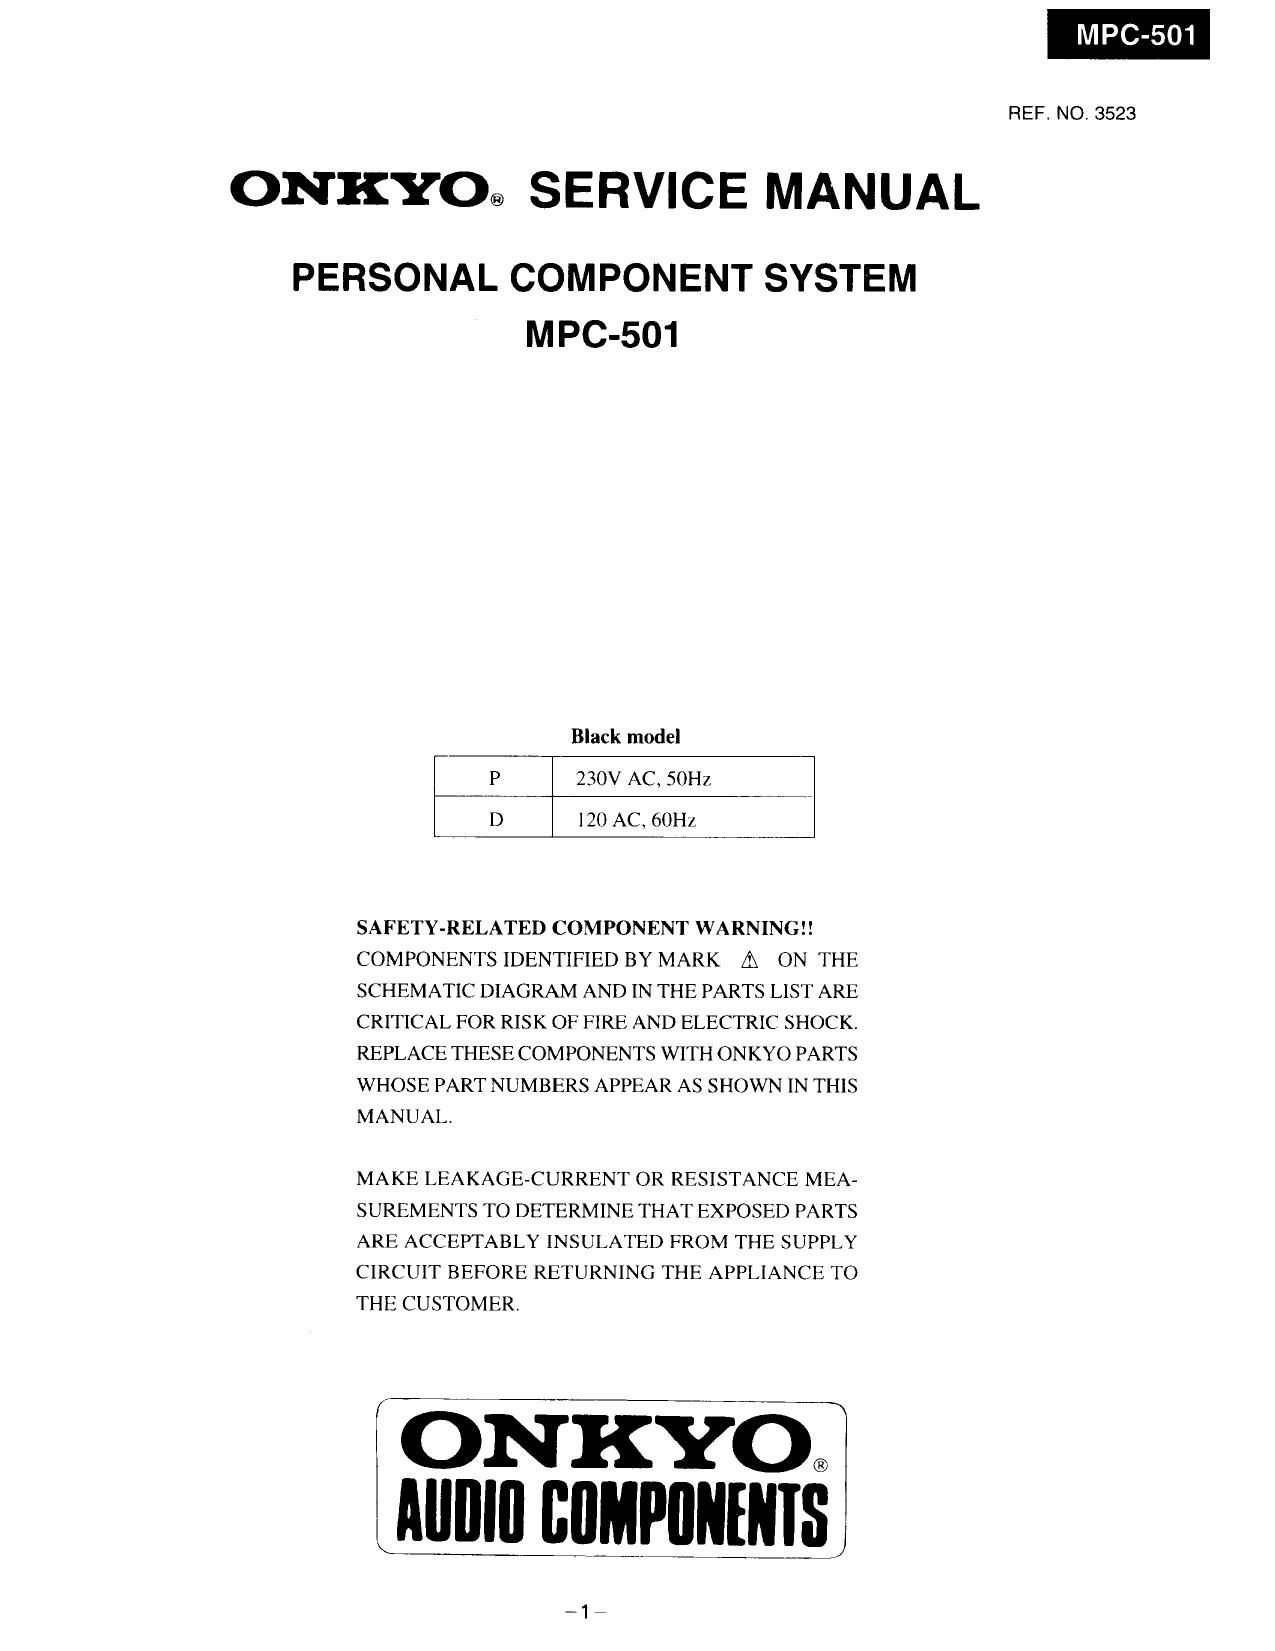 Onkyo MPC 501 Service Manual